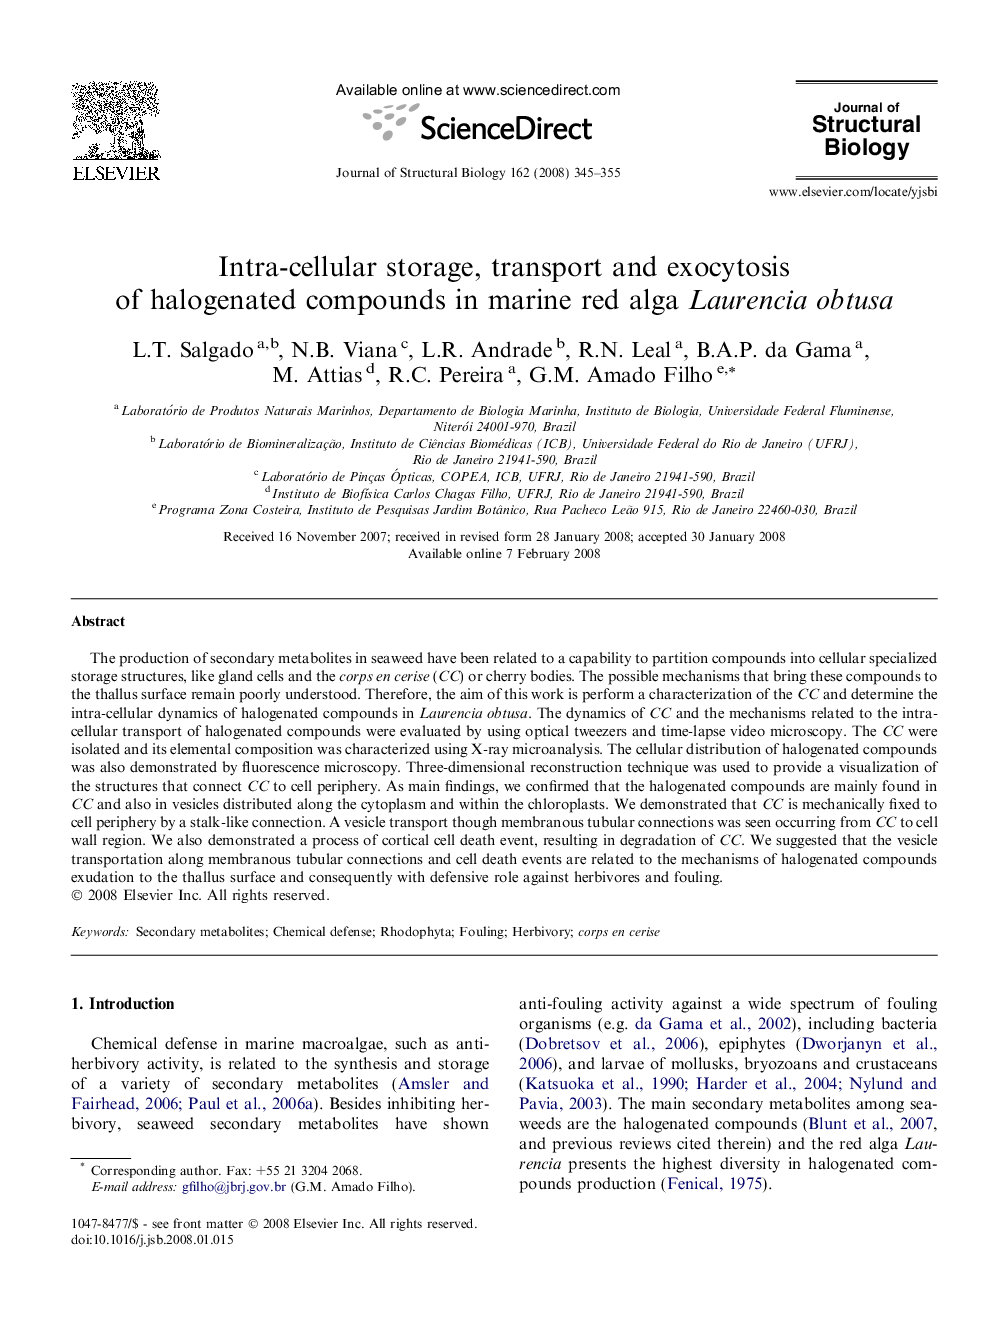 Intra-cellular storage, transport and exocytosis of halogenated compounds in marine red alga Laurencia obtusa